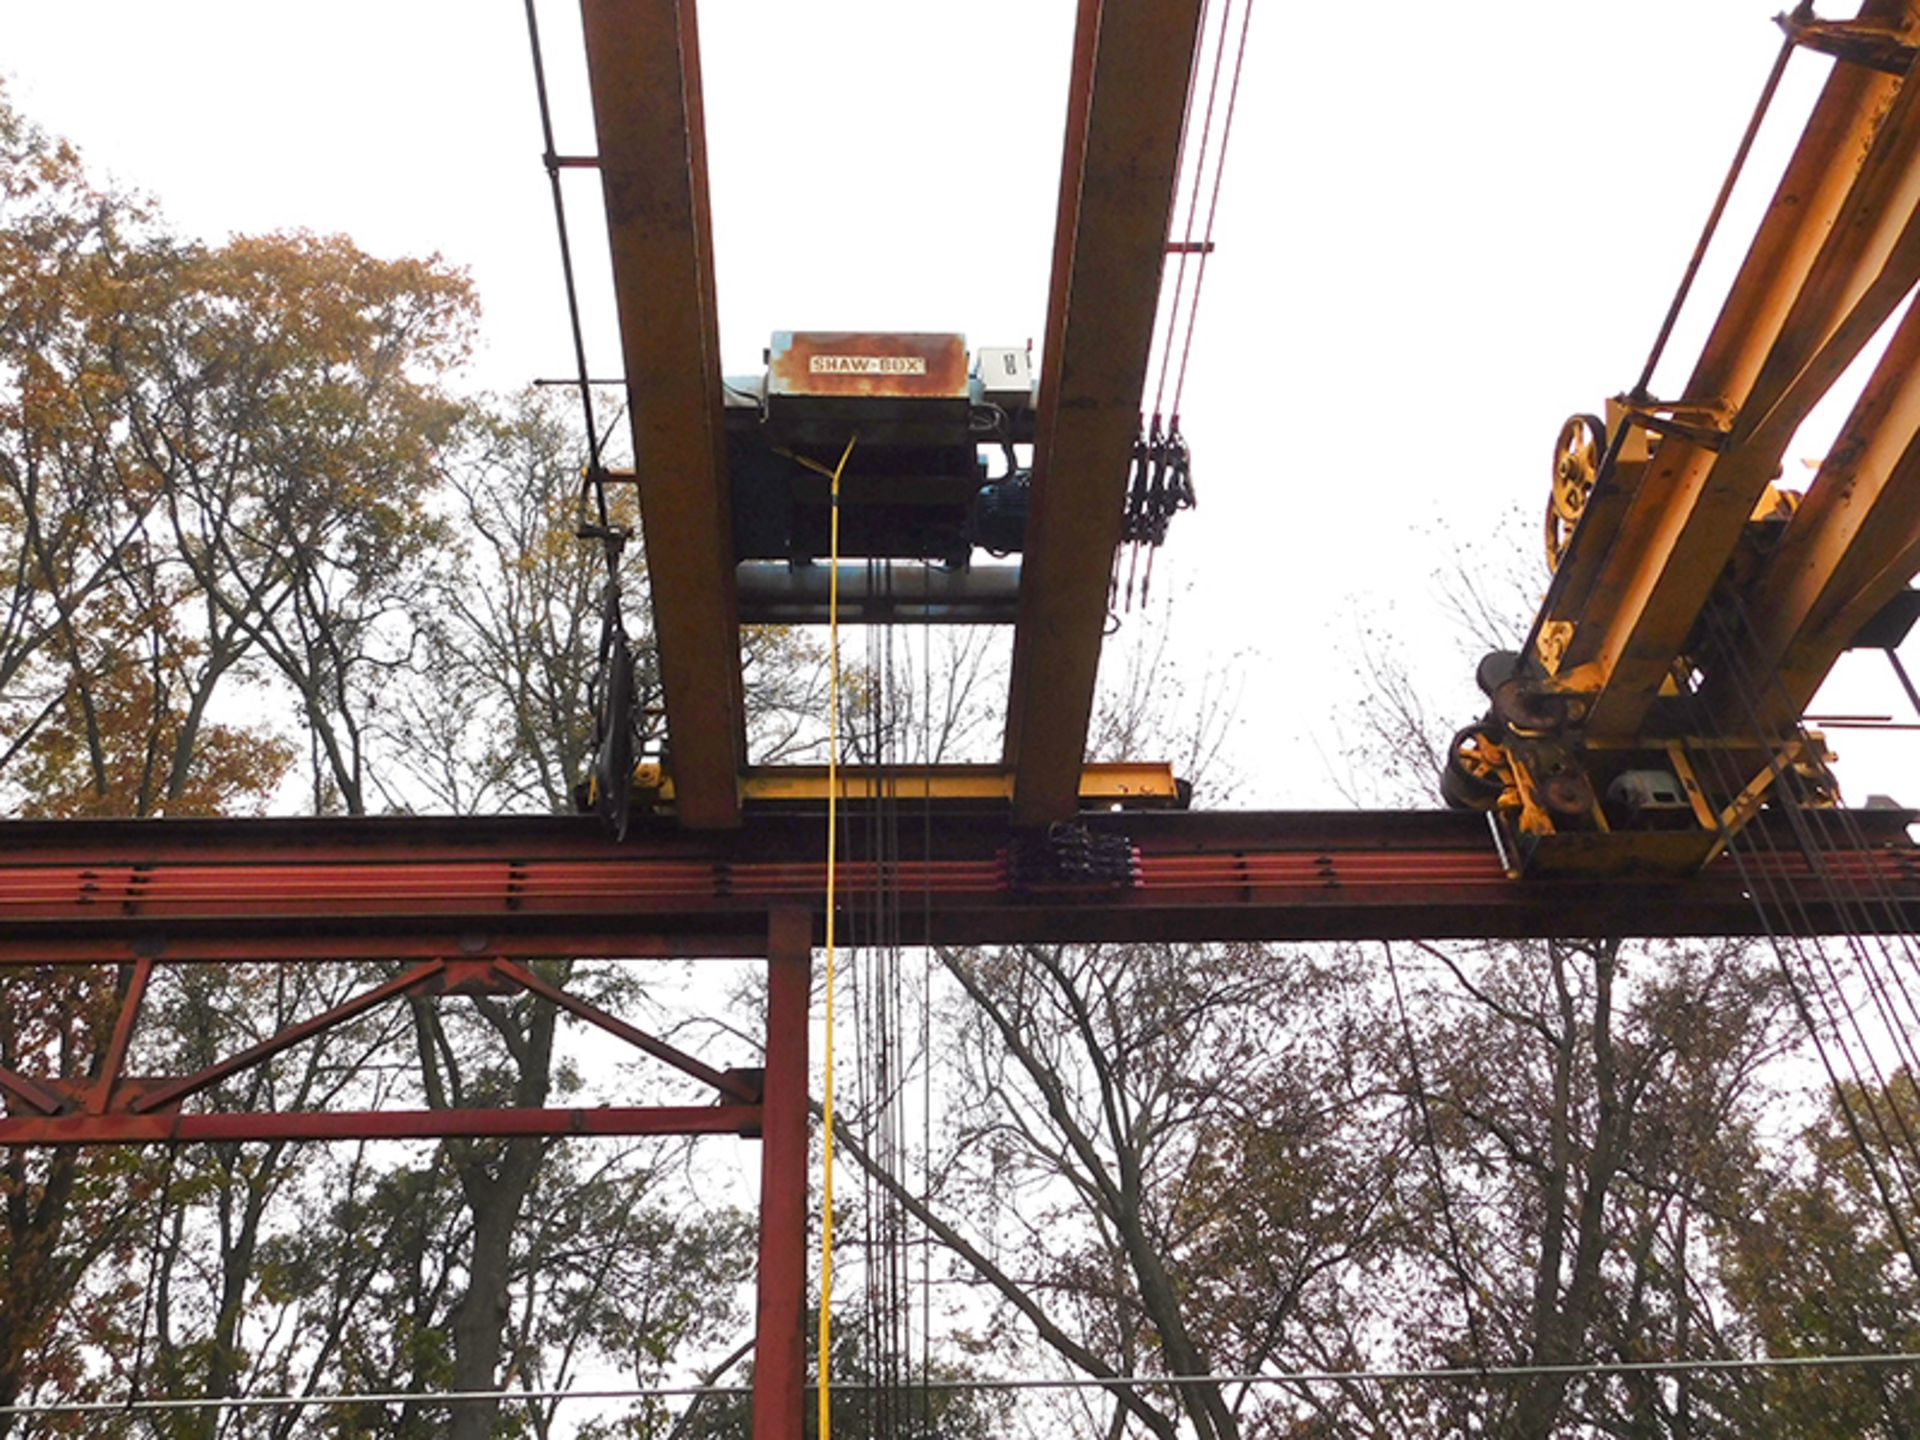 Shaw-Box Overhead Bridge Crane, 12 ton capacity, 48' 6" wide